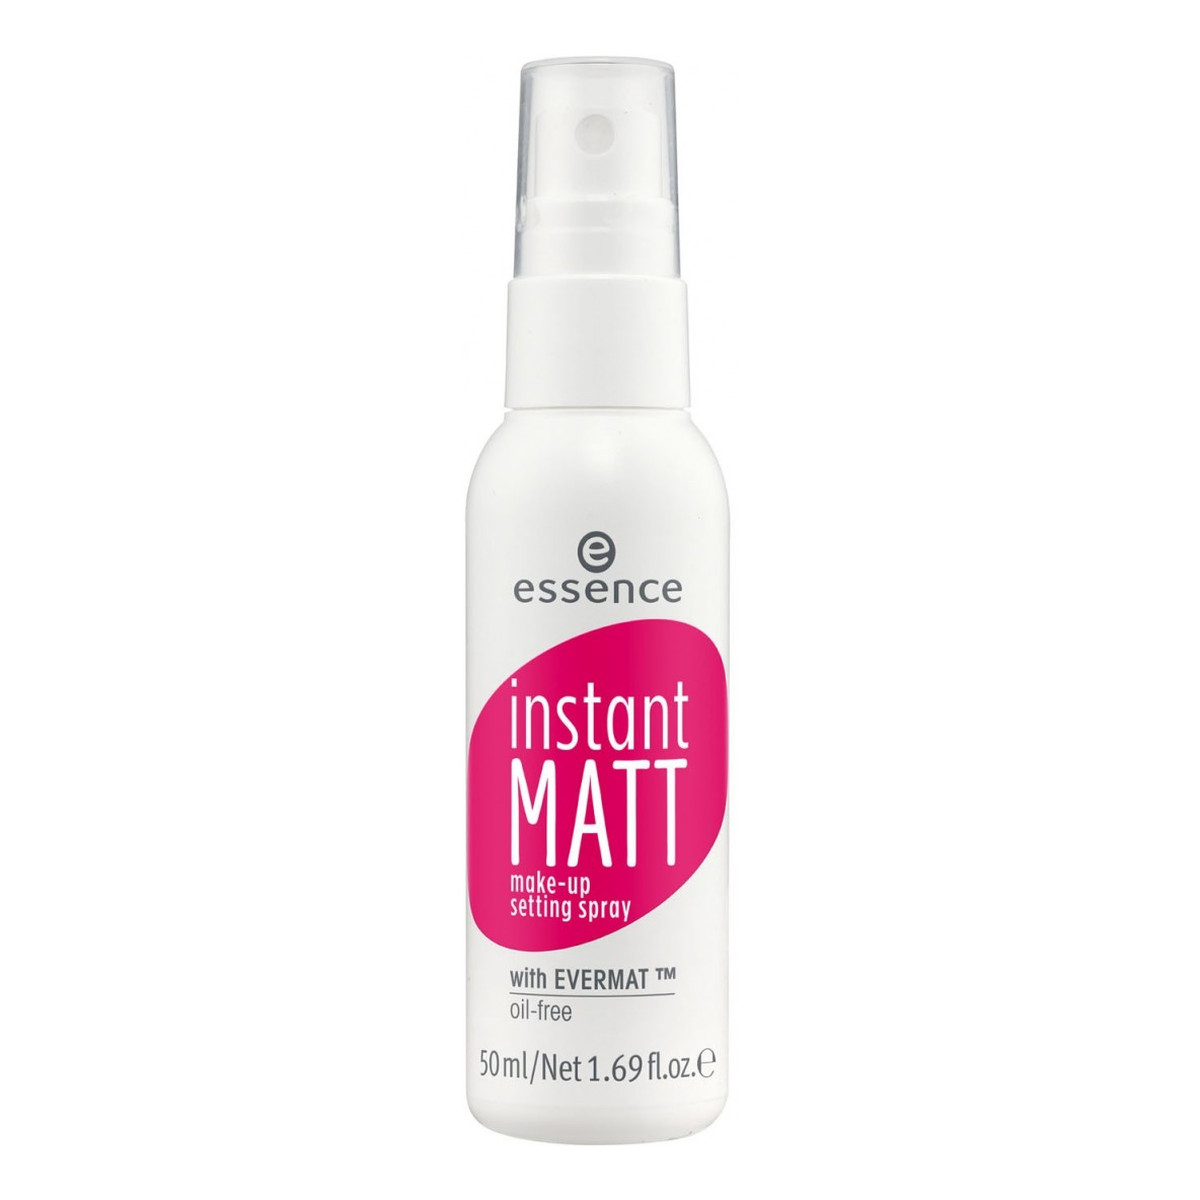 Essence Instant Matt Make-Up Setting spray do utwalania makijażu 50ml